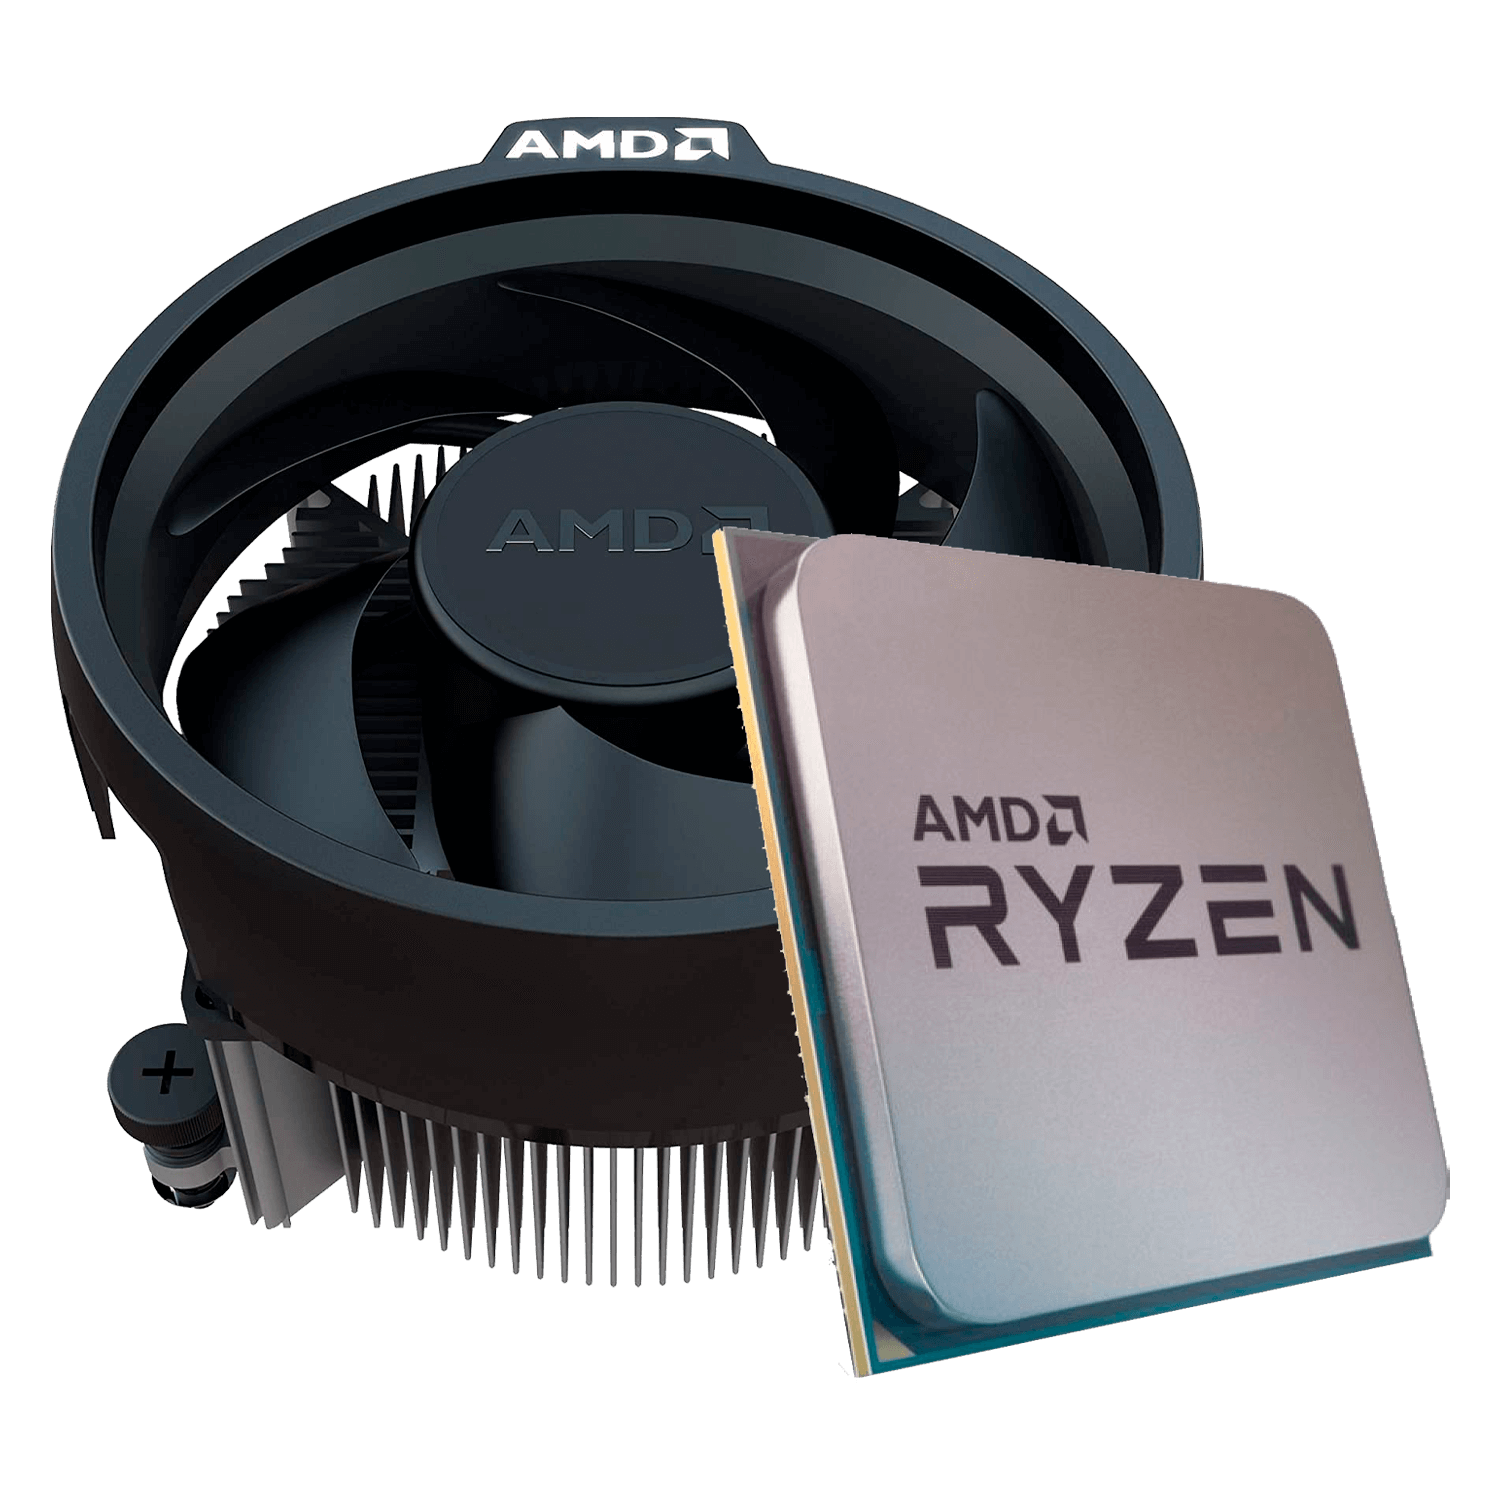 Processador AMD Ryzen 3 4100 MPK OEM Socket AM4 4 Core 8 Threads 3.8GHz e 4.0GHz Turbo Cache 256KB